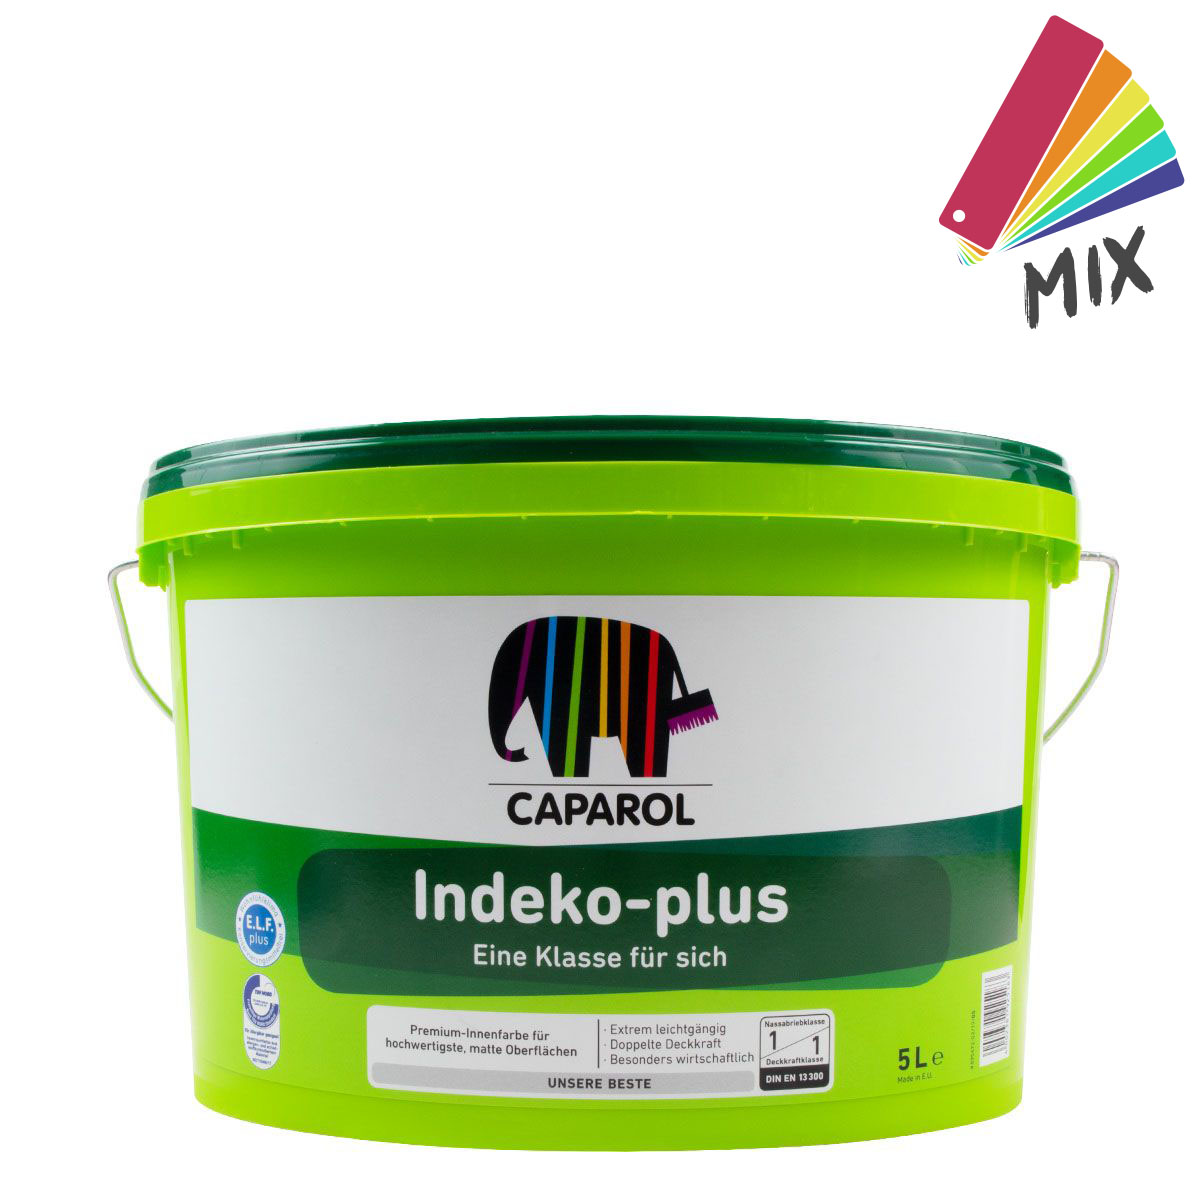 Caparol Indeko Plus 5L wunschfarbton PG A, hochdeckende Wandfarbe, premium Innenfarbe